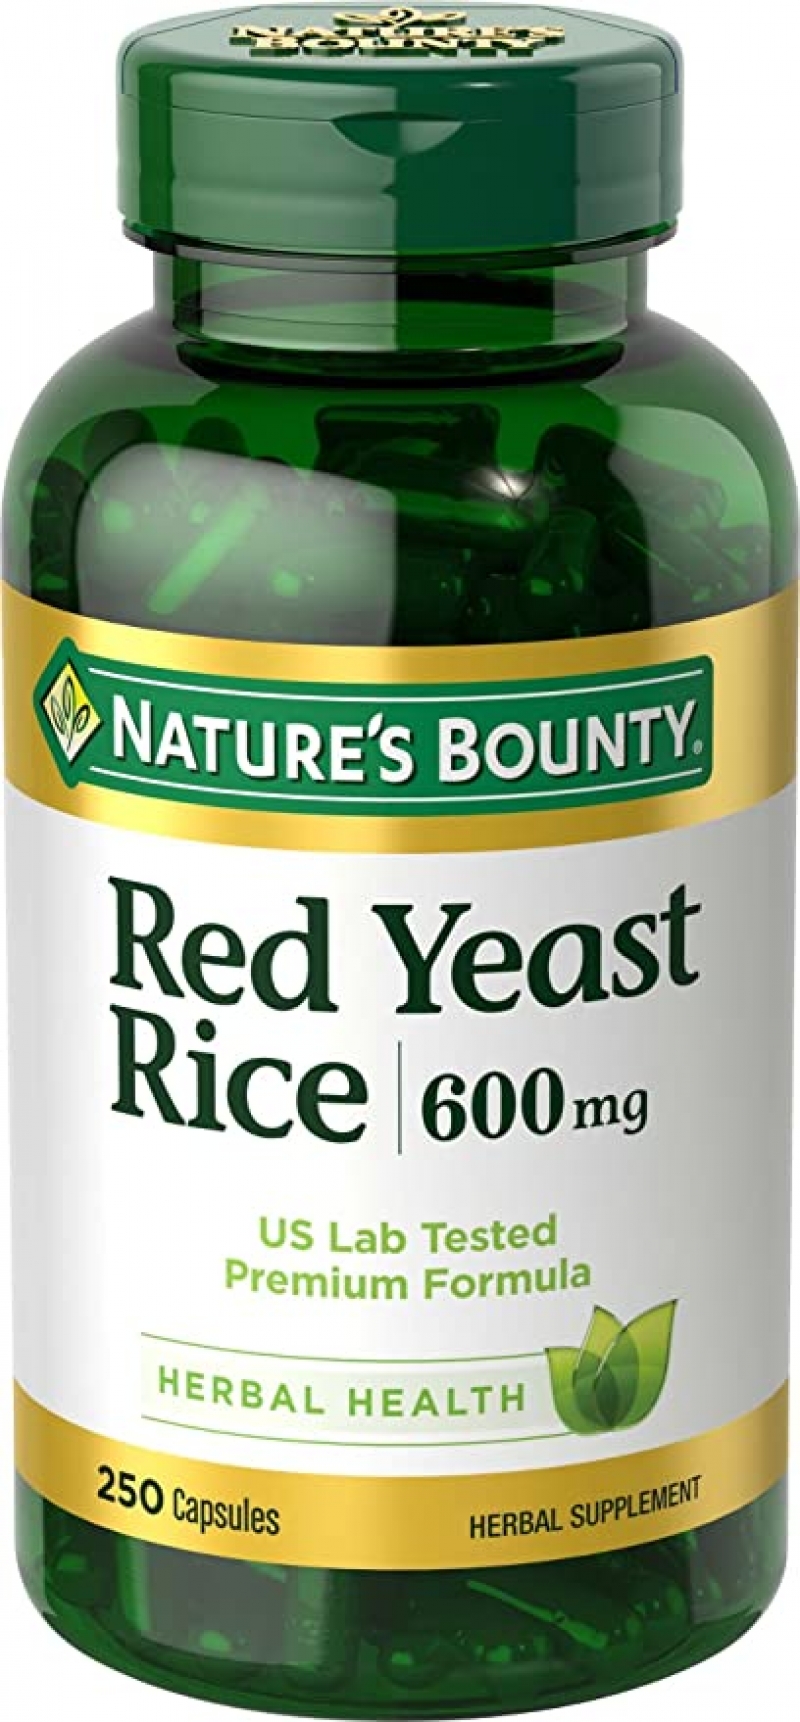 ihocon: Nature's Bounty Red Yeast Rice Pills & Herbal Health Supplement, Dietary Additive, 600mg Capsules, 250 Count '  紅麴膠囊